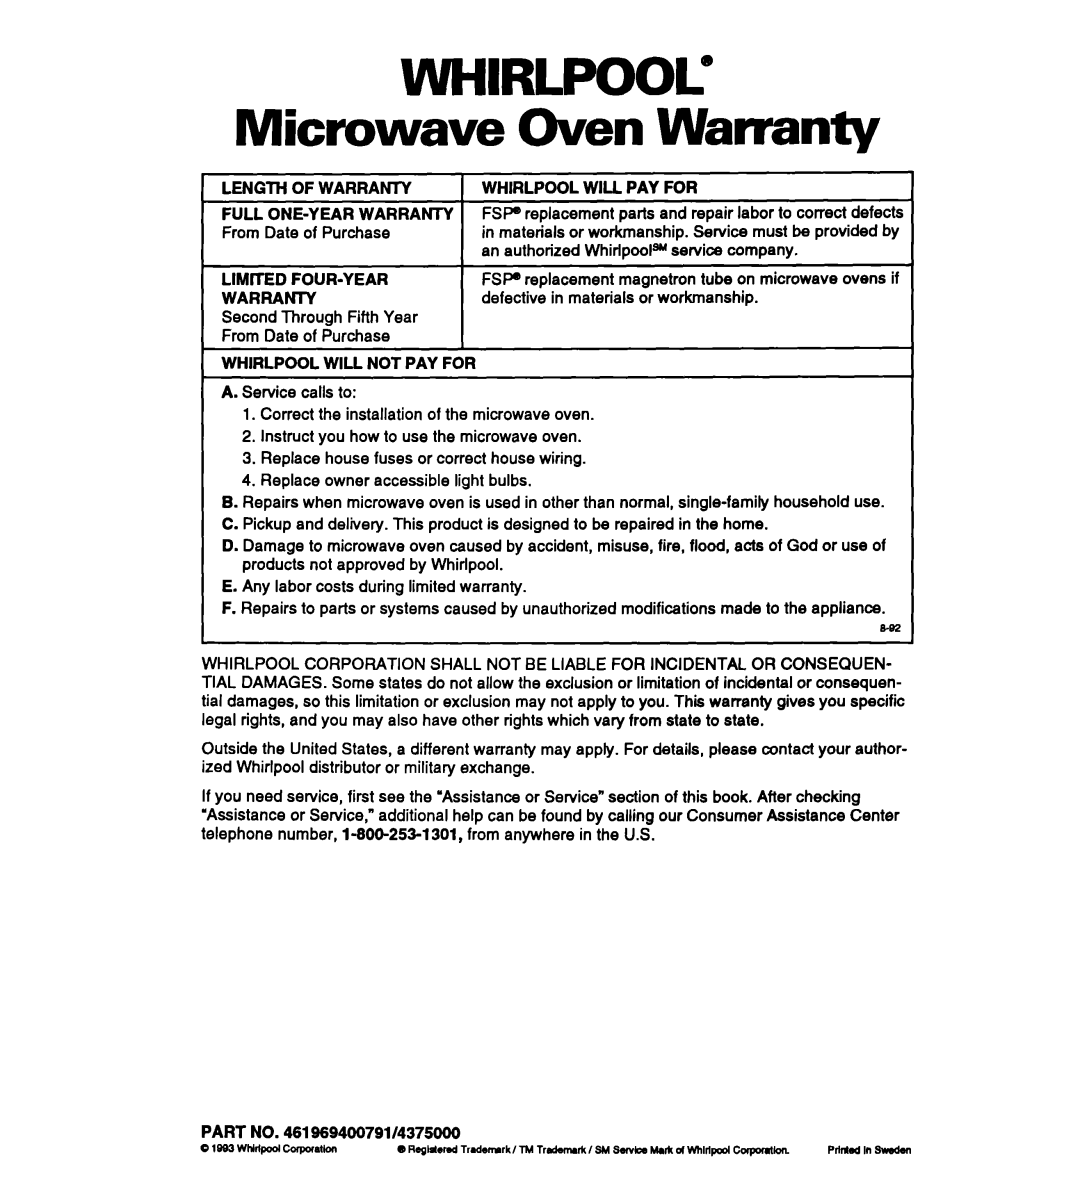 Whirlpool MT2070XAB, MT3090XAQ/B warranty Whirlpool@, Microwave Oven Warranty 